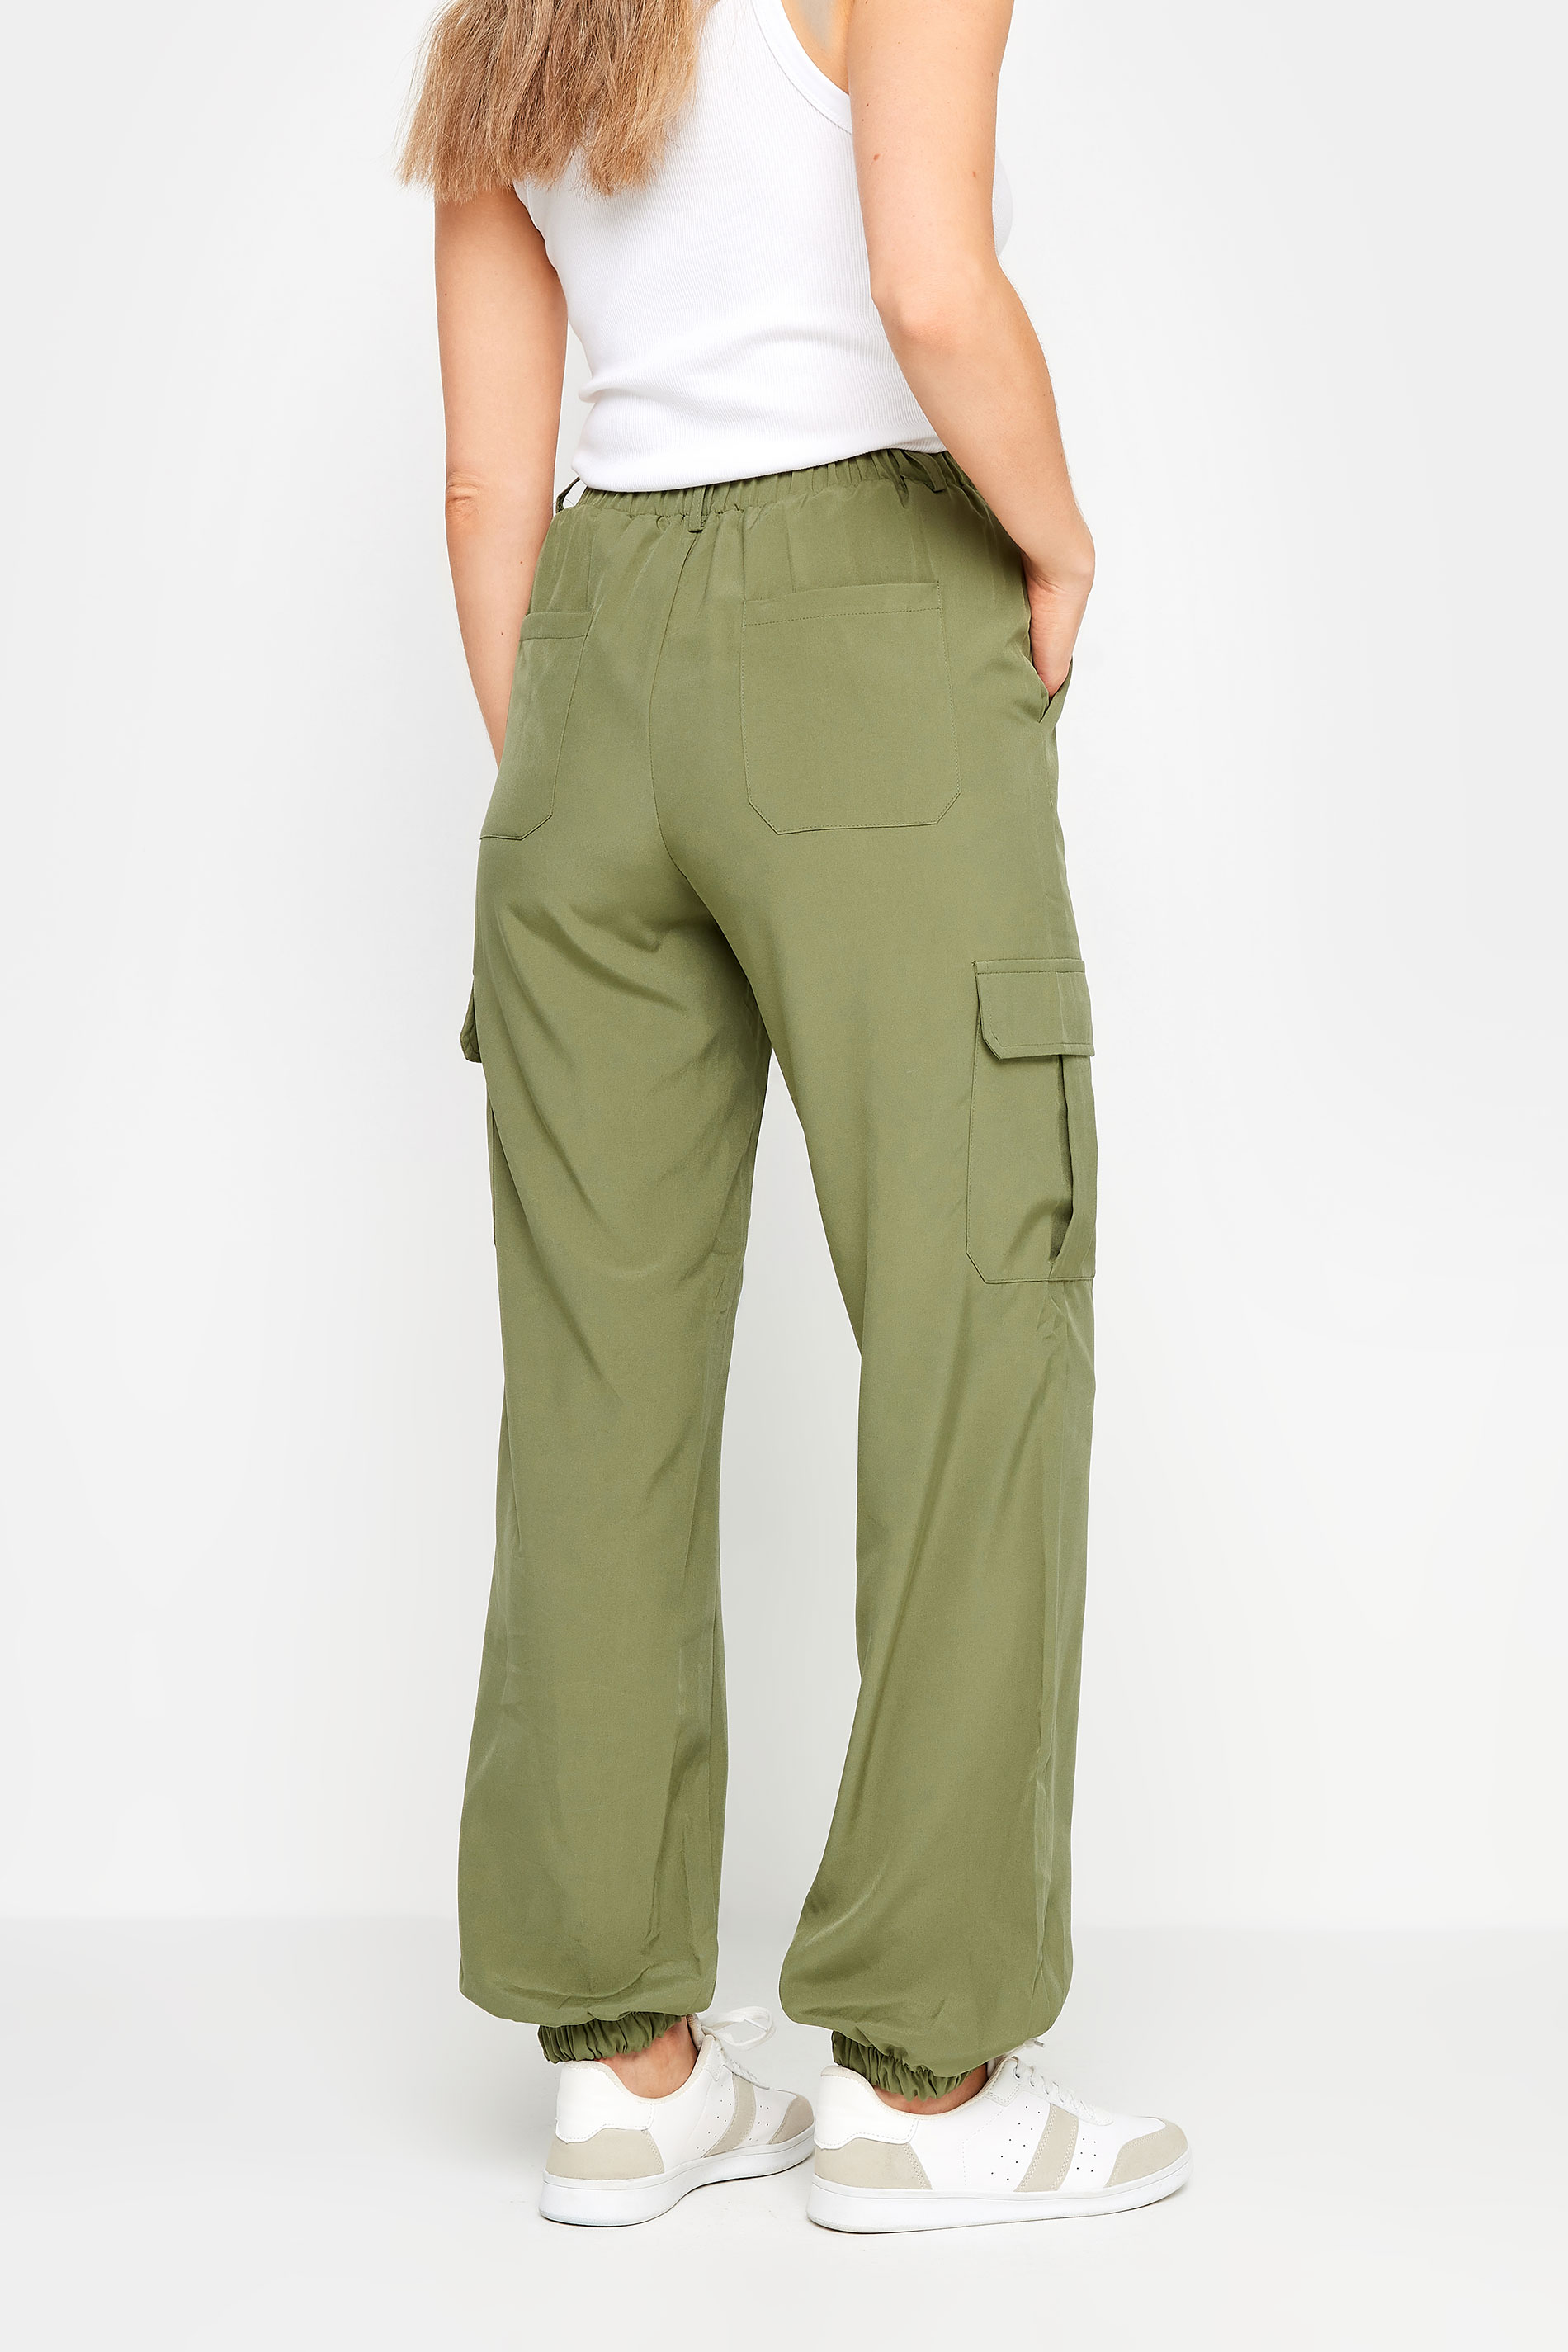 LTS Tall Women's Khaki Green Cuffed Cargo Trousers | Long Tall Sally 3